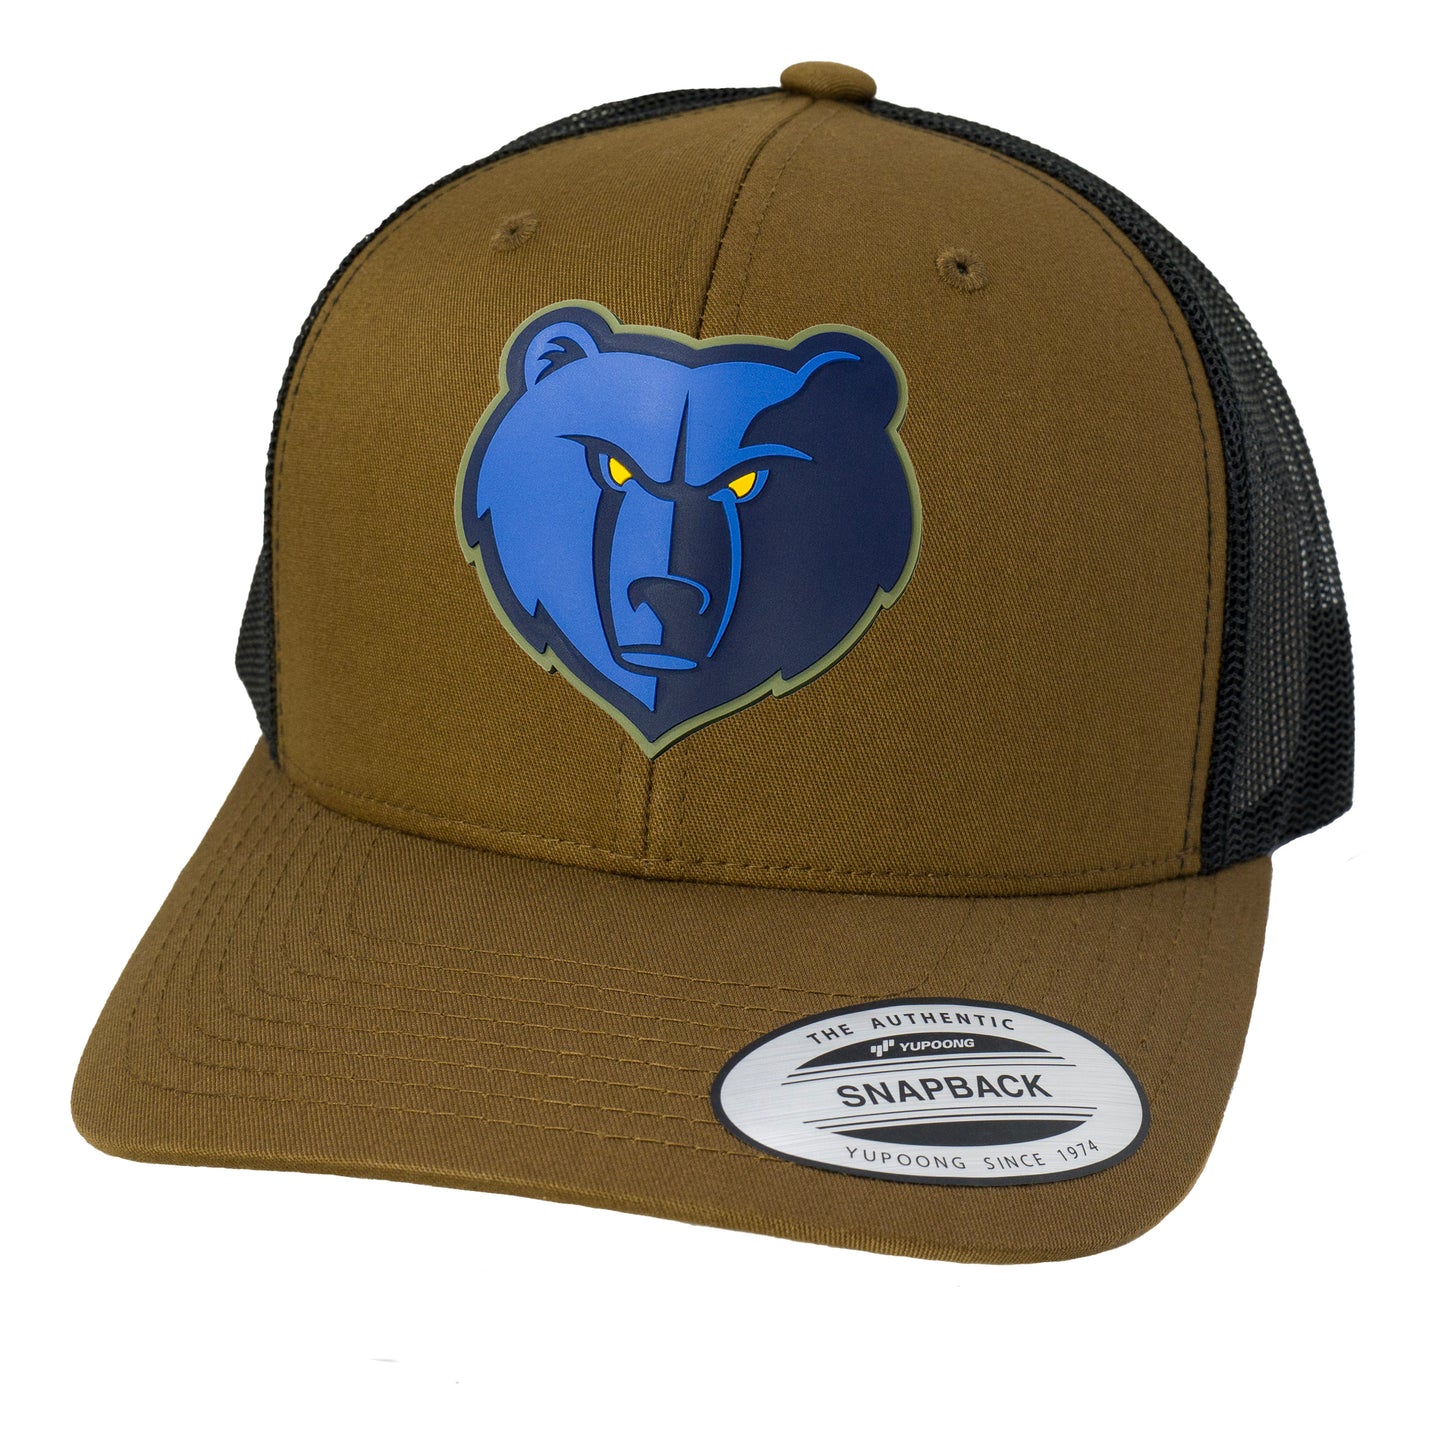 Memphis Grizzlies 3D YP Snapback Trucker Hat- Coyote Brown/ Black - Ten Gallon Hat Co.